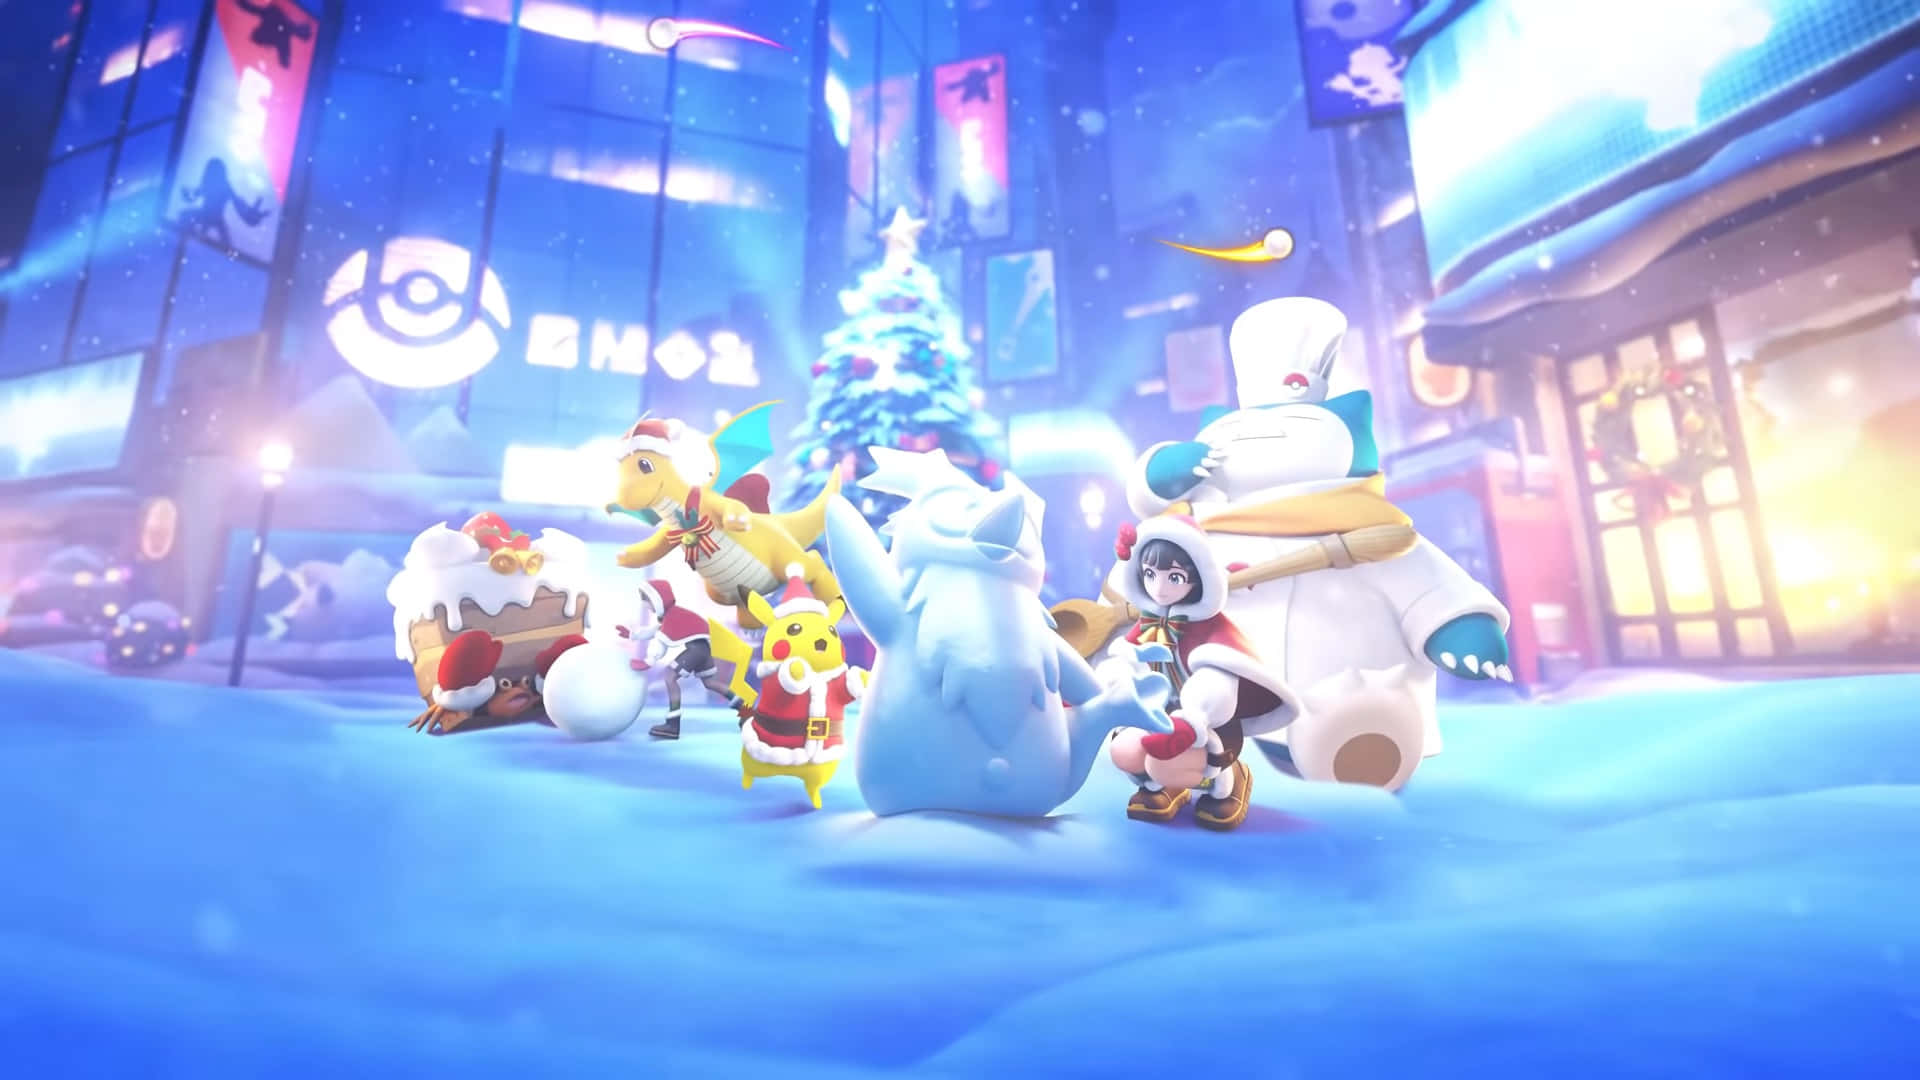 Pokémon Christmas Snowy Street Party Wallpaper